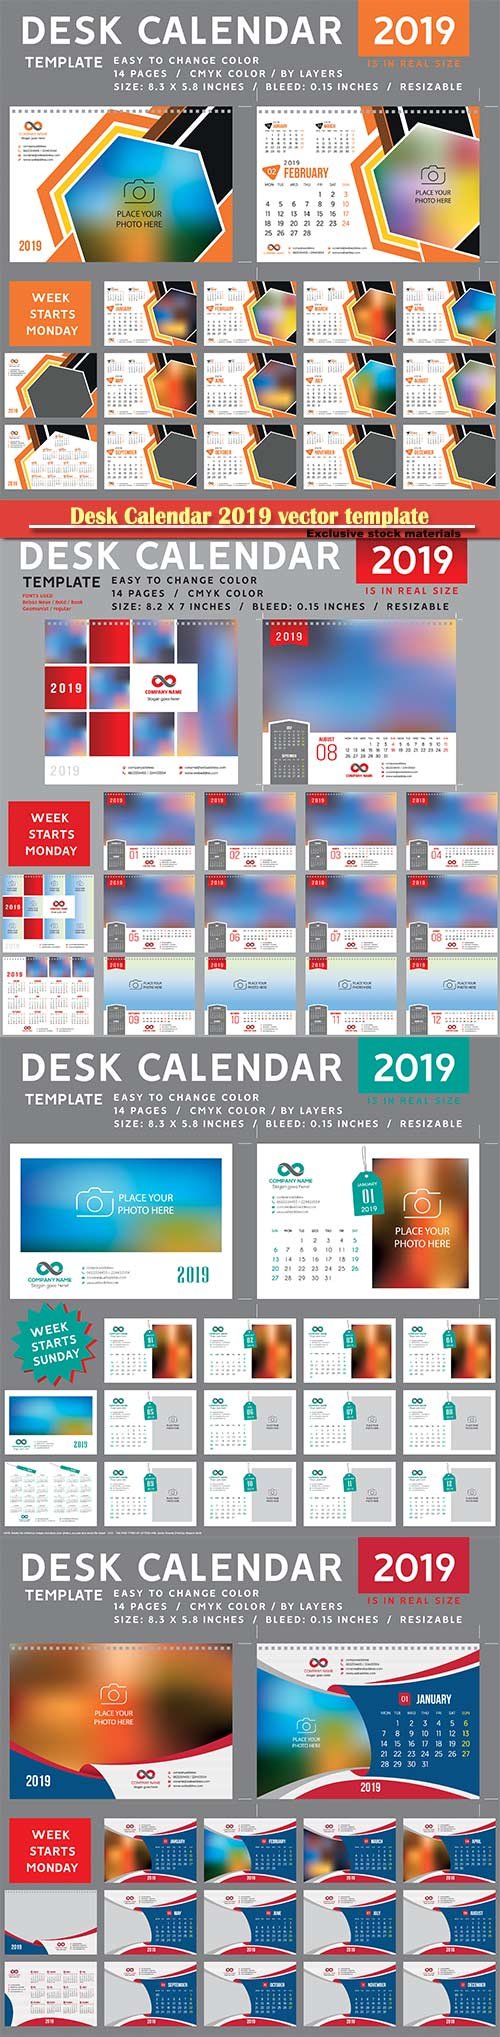 Desk Calendar 2019 vector template, 12 months included # 5